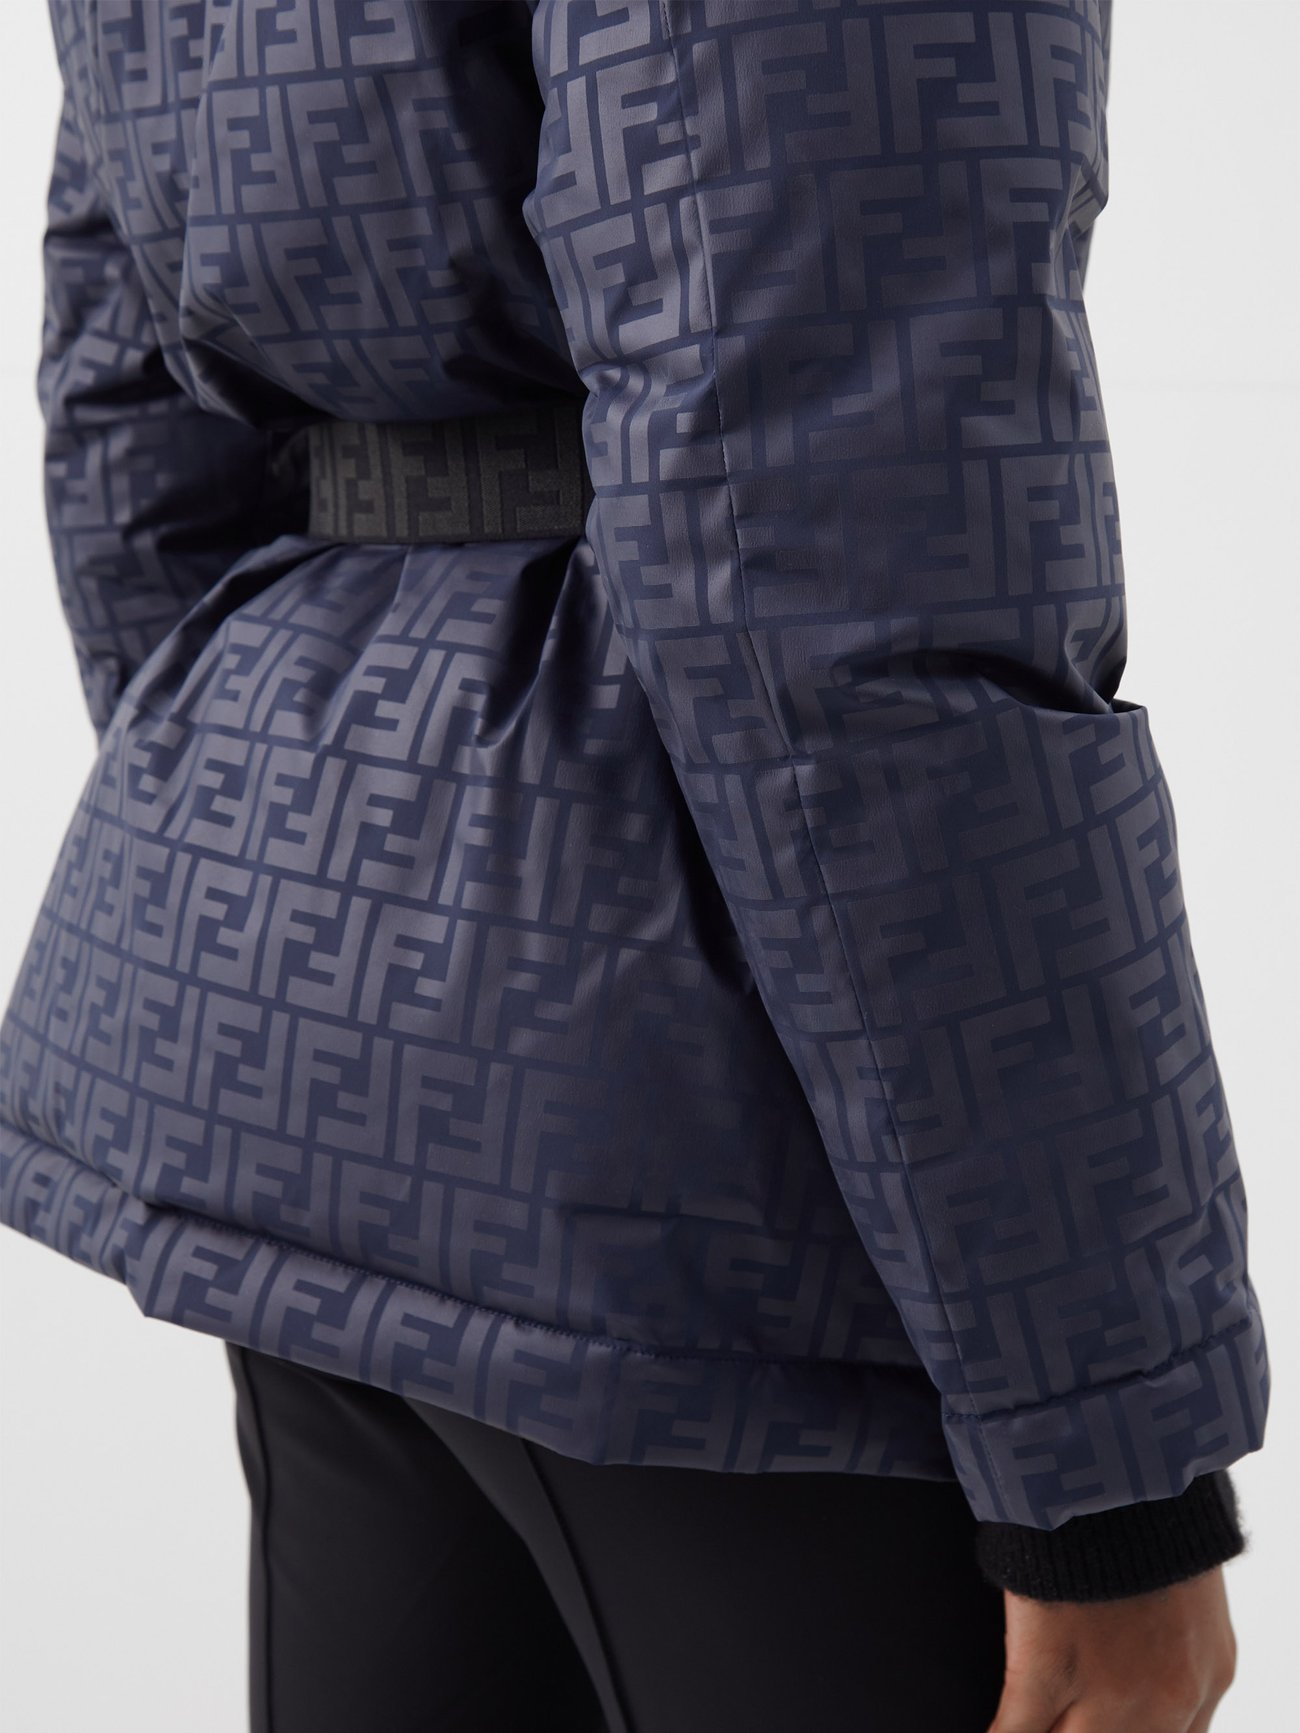 Fendi - Ff-logo Reversible Hooded Ski Jacket - Womens - Navy Black